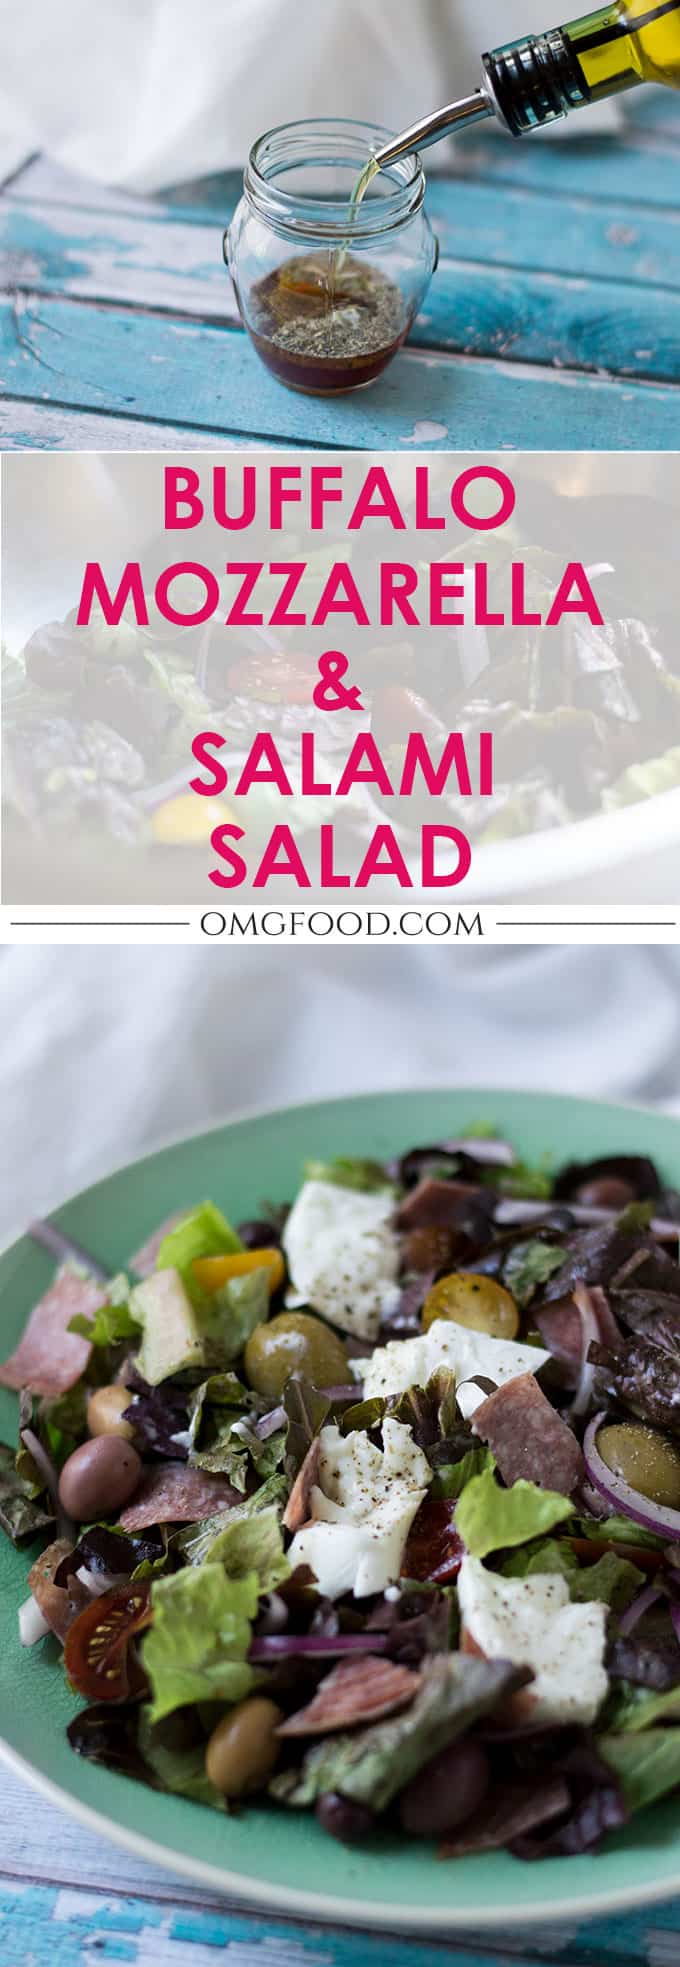 Pinterest banner for buffalo mozzarella and salami salad.